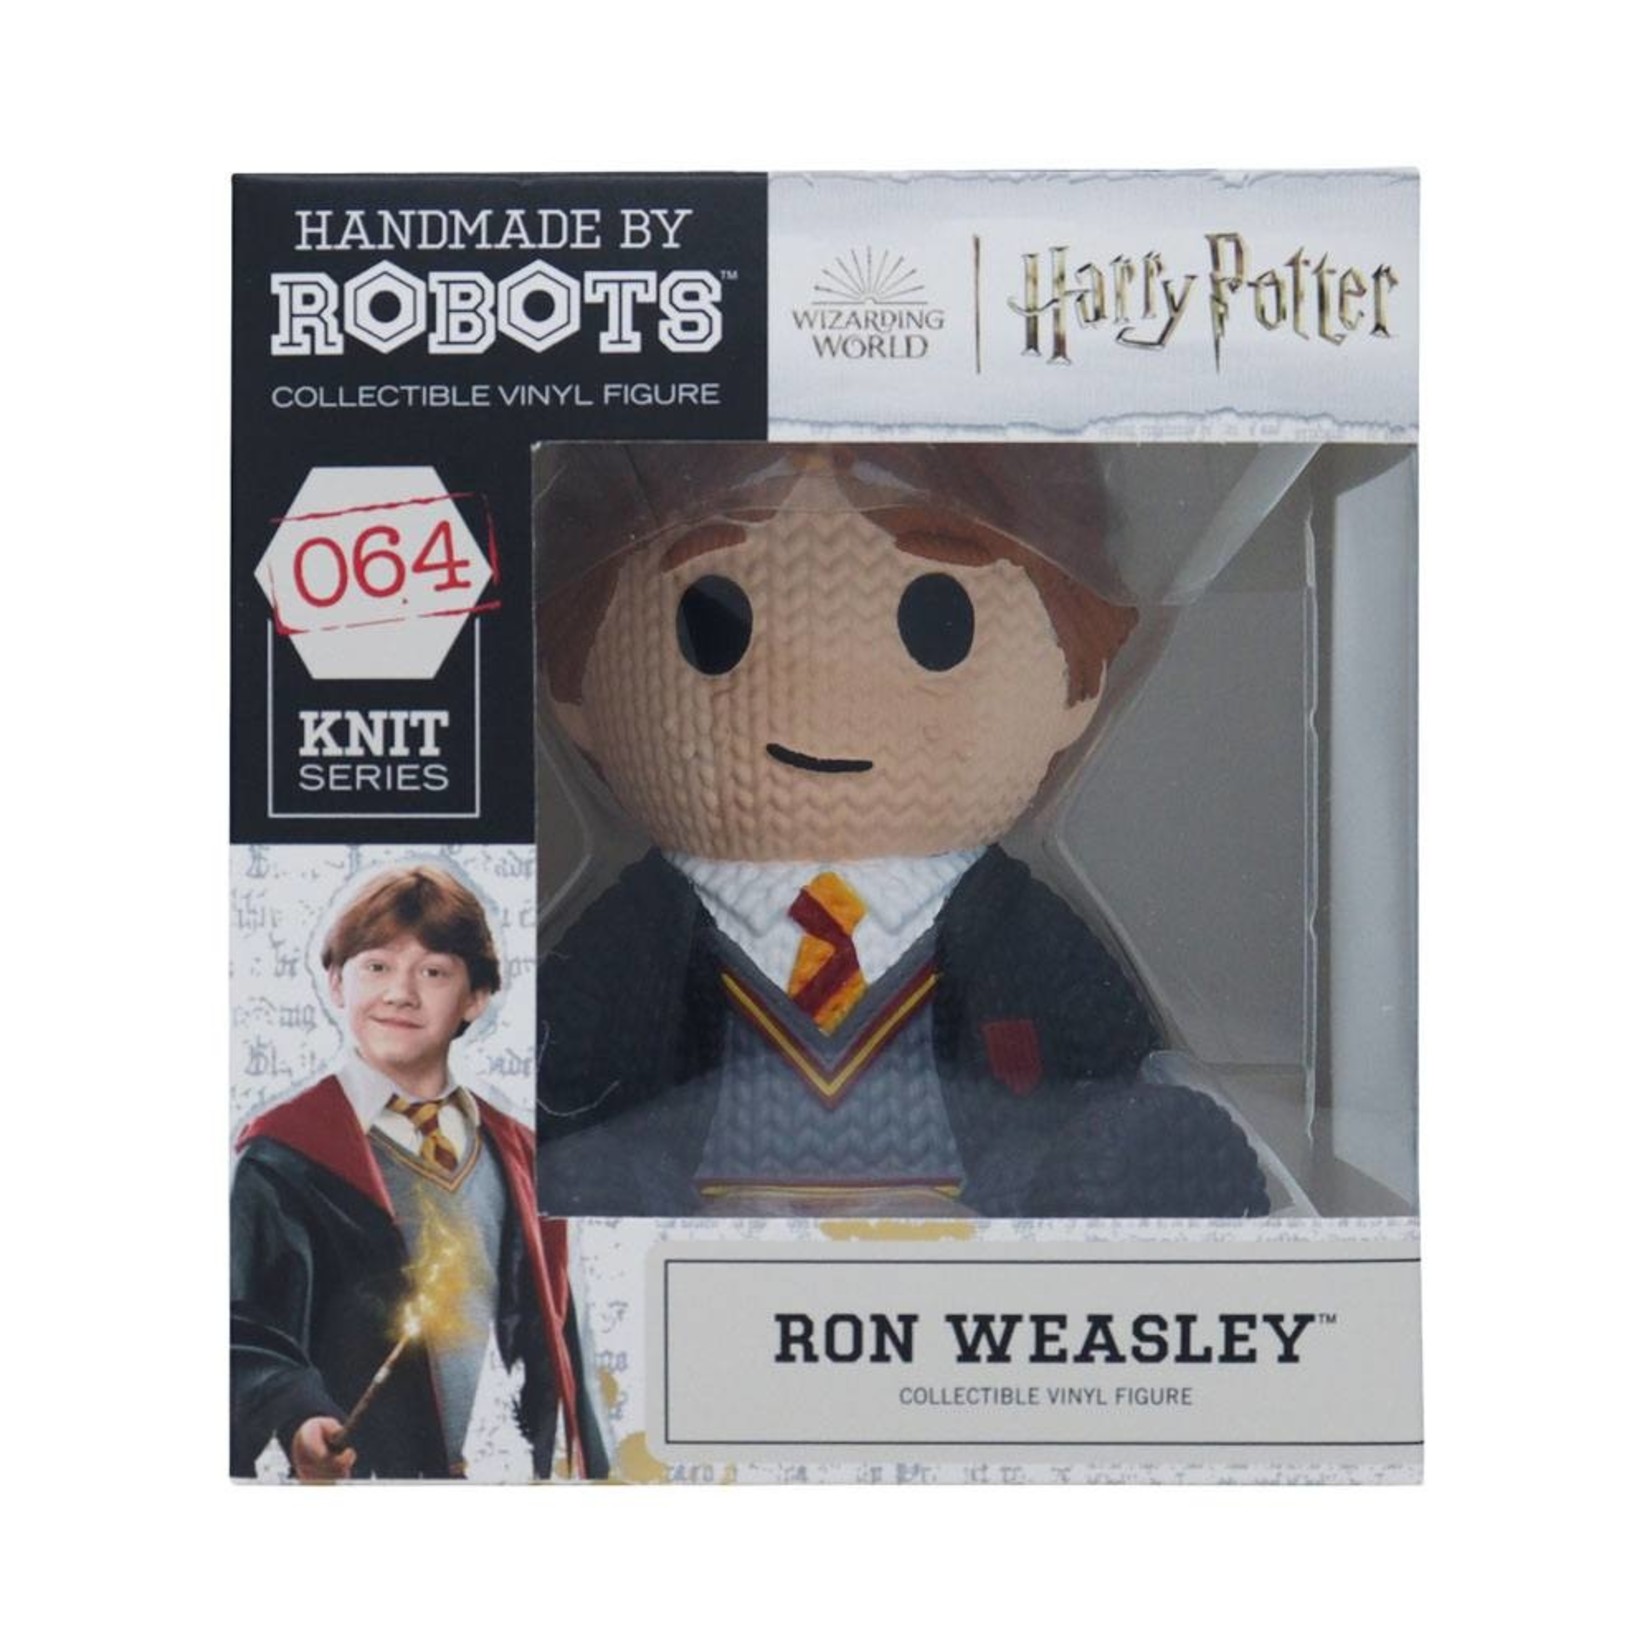 Handmade by Robots Handmade by Robots Harry Potter Ron Weasley Collectible Vinyl Figure